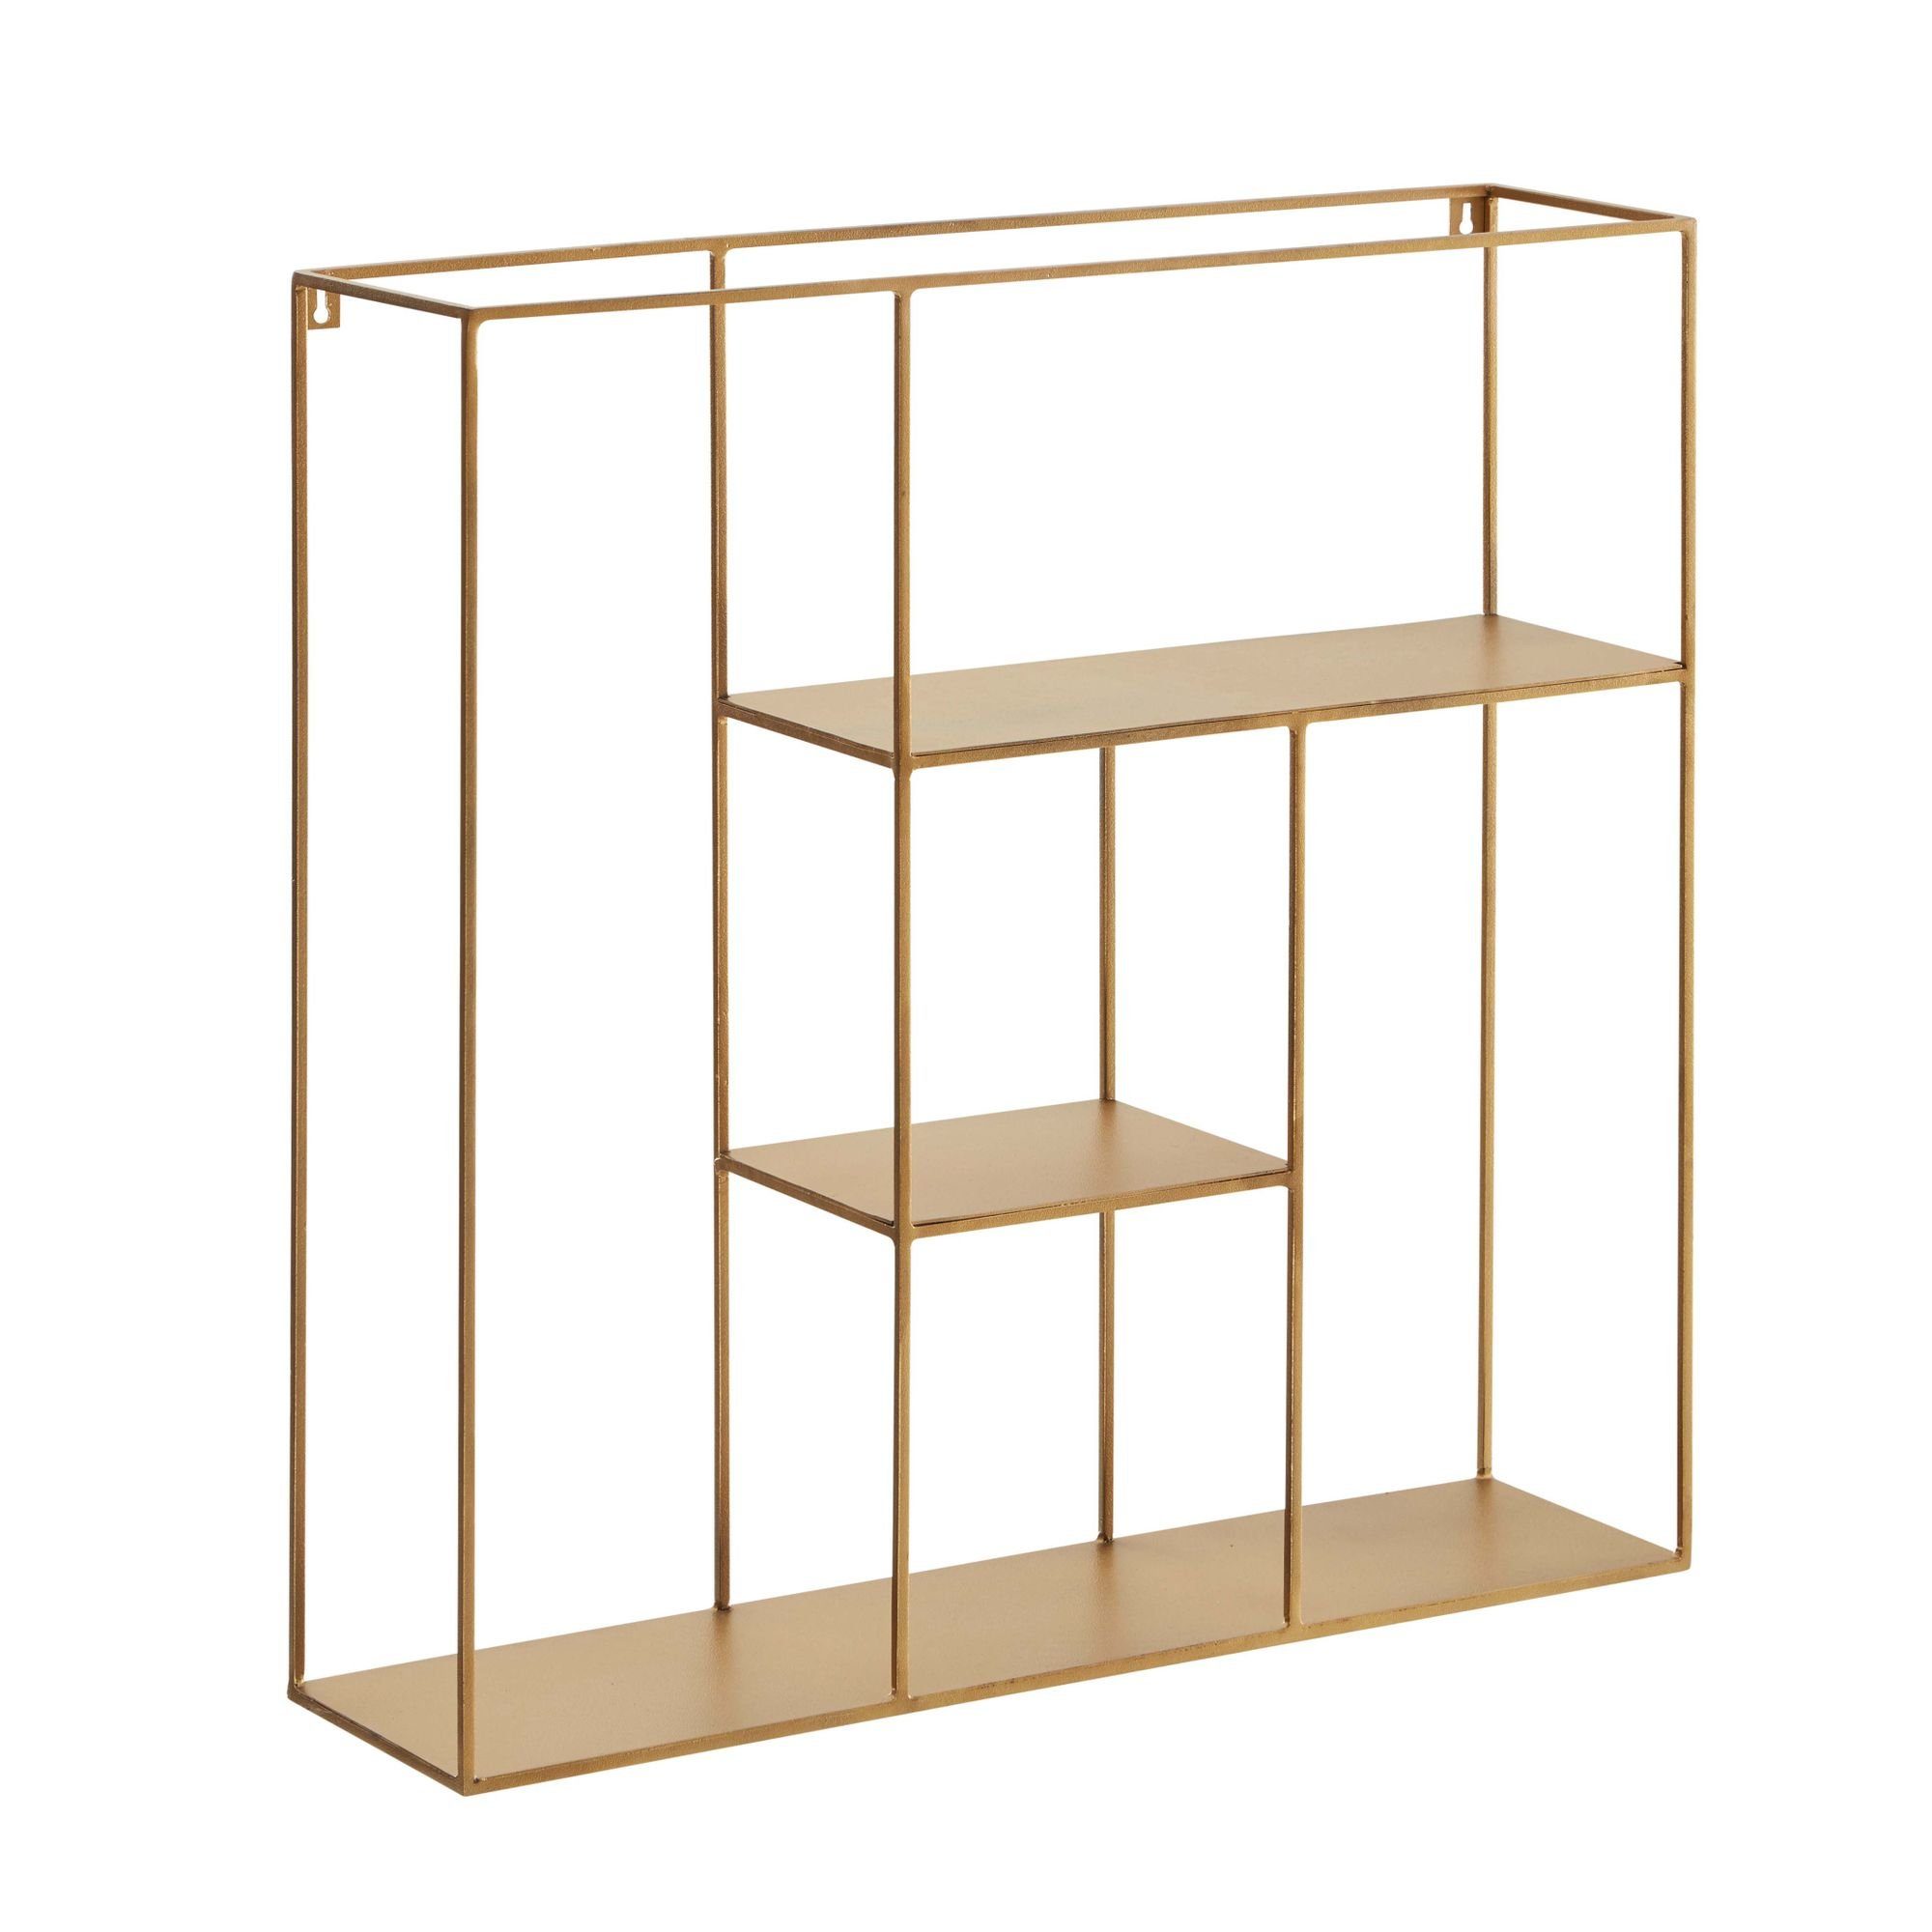 KADIMA DESIGN Wandregal Golden Iron Shelf with 3 Shelves, Handcrafted Floating Wall Shelf